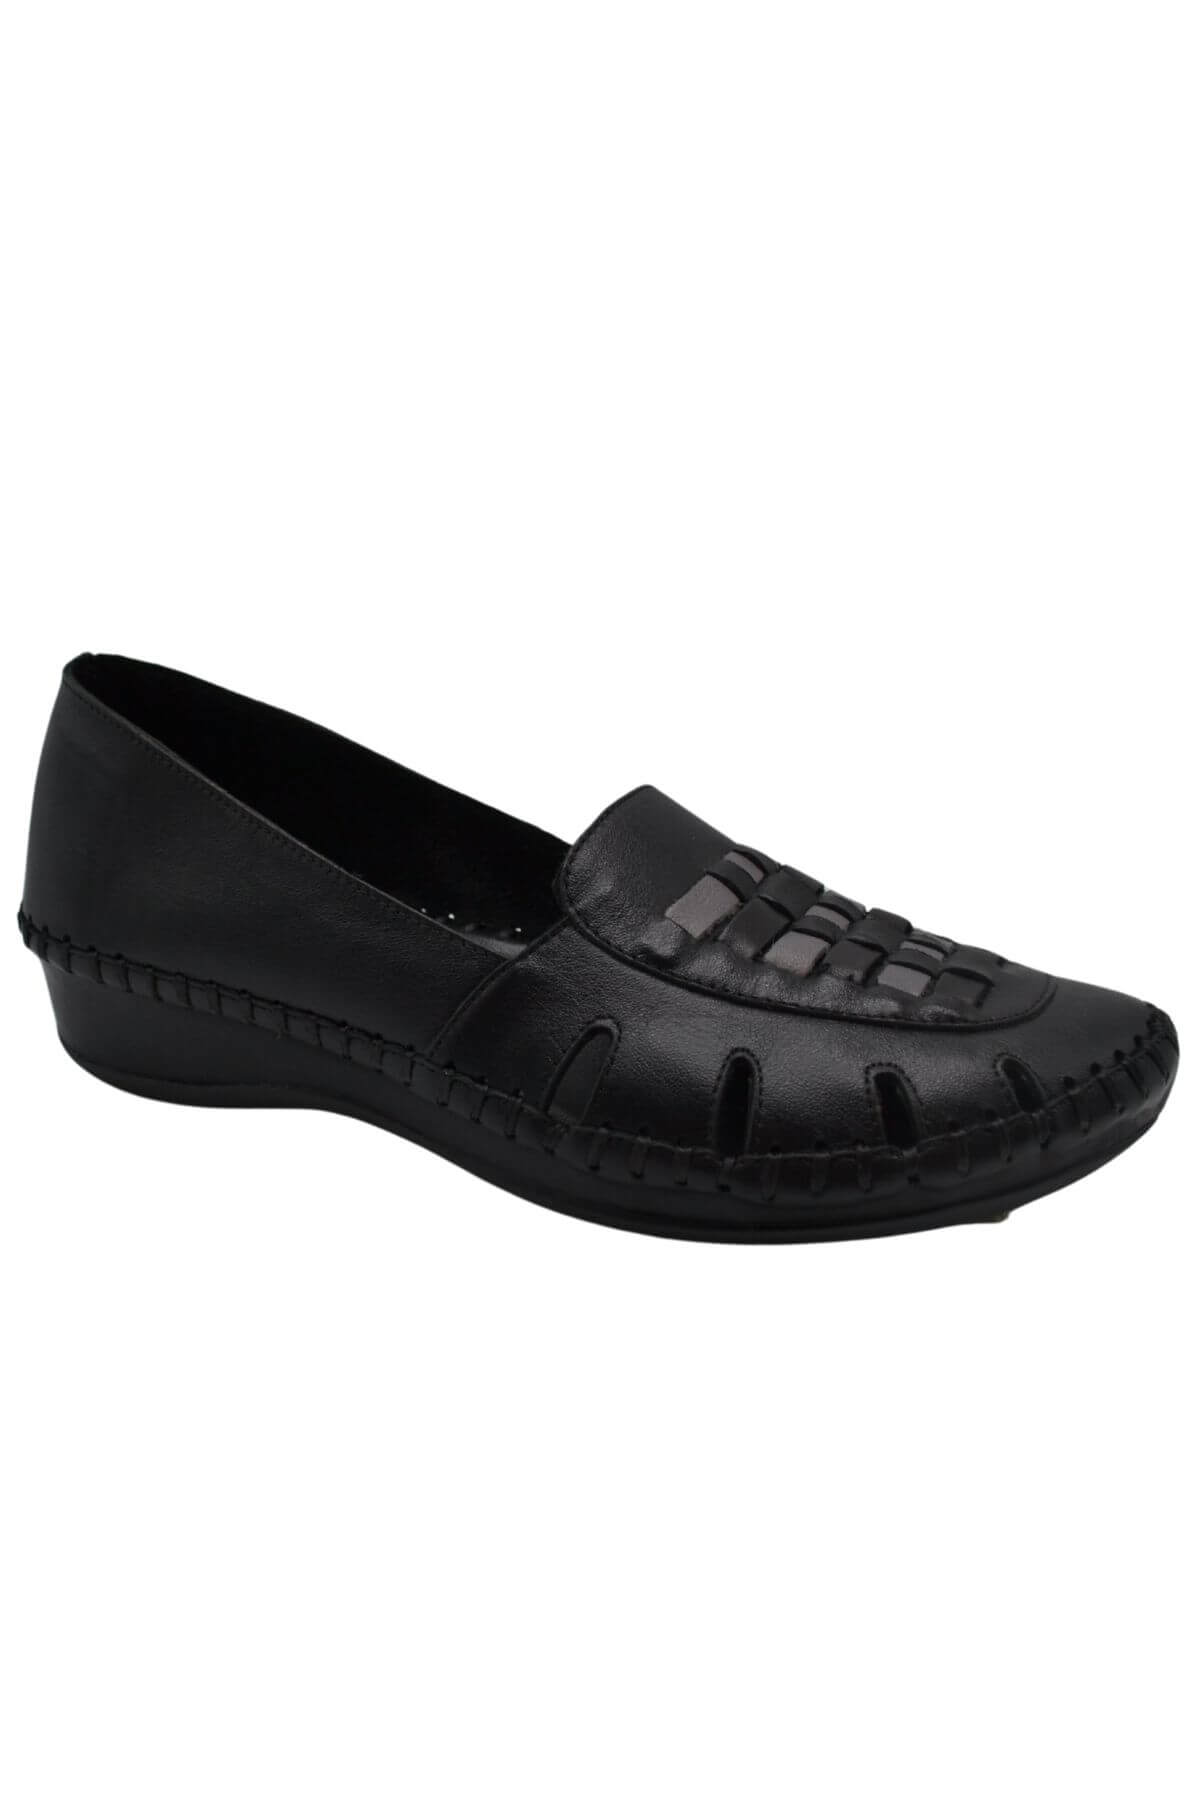 Kadın Comfort Deri Sandalet Siyah 23033320Y - Thumbnail